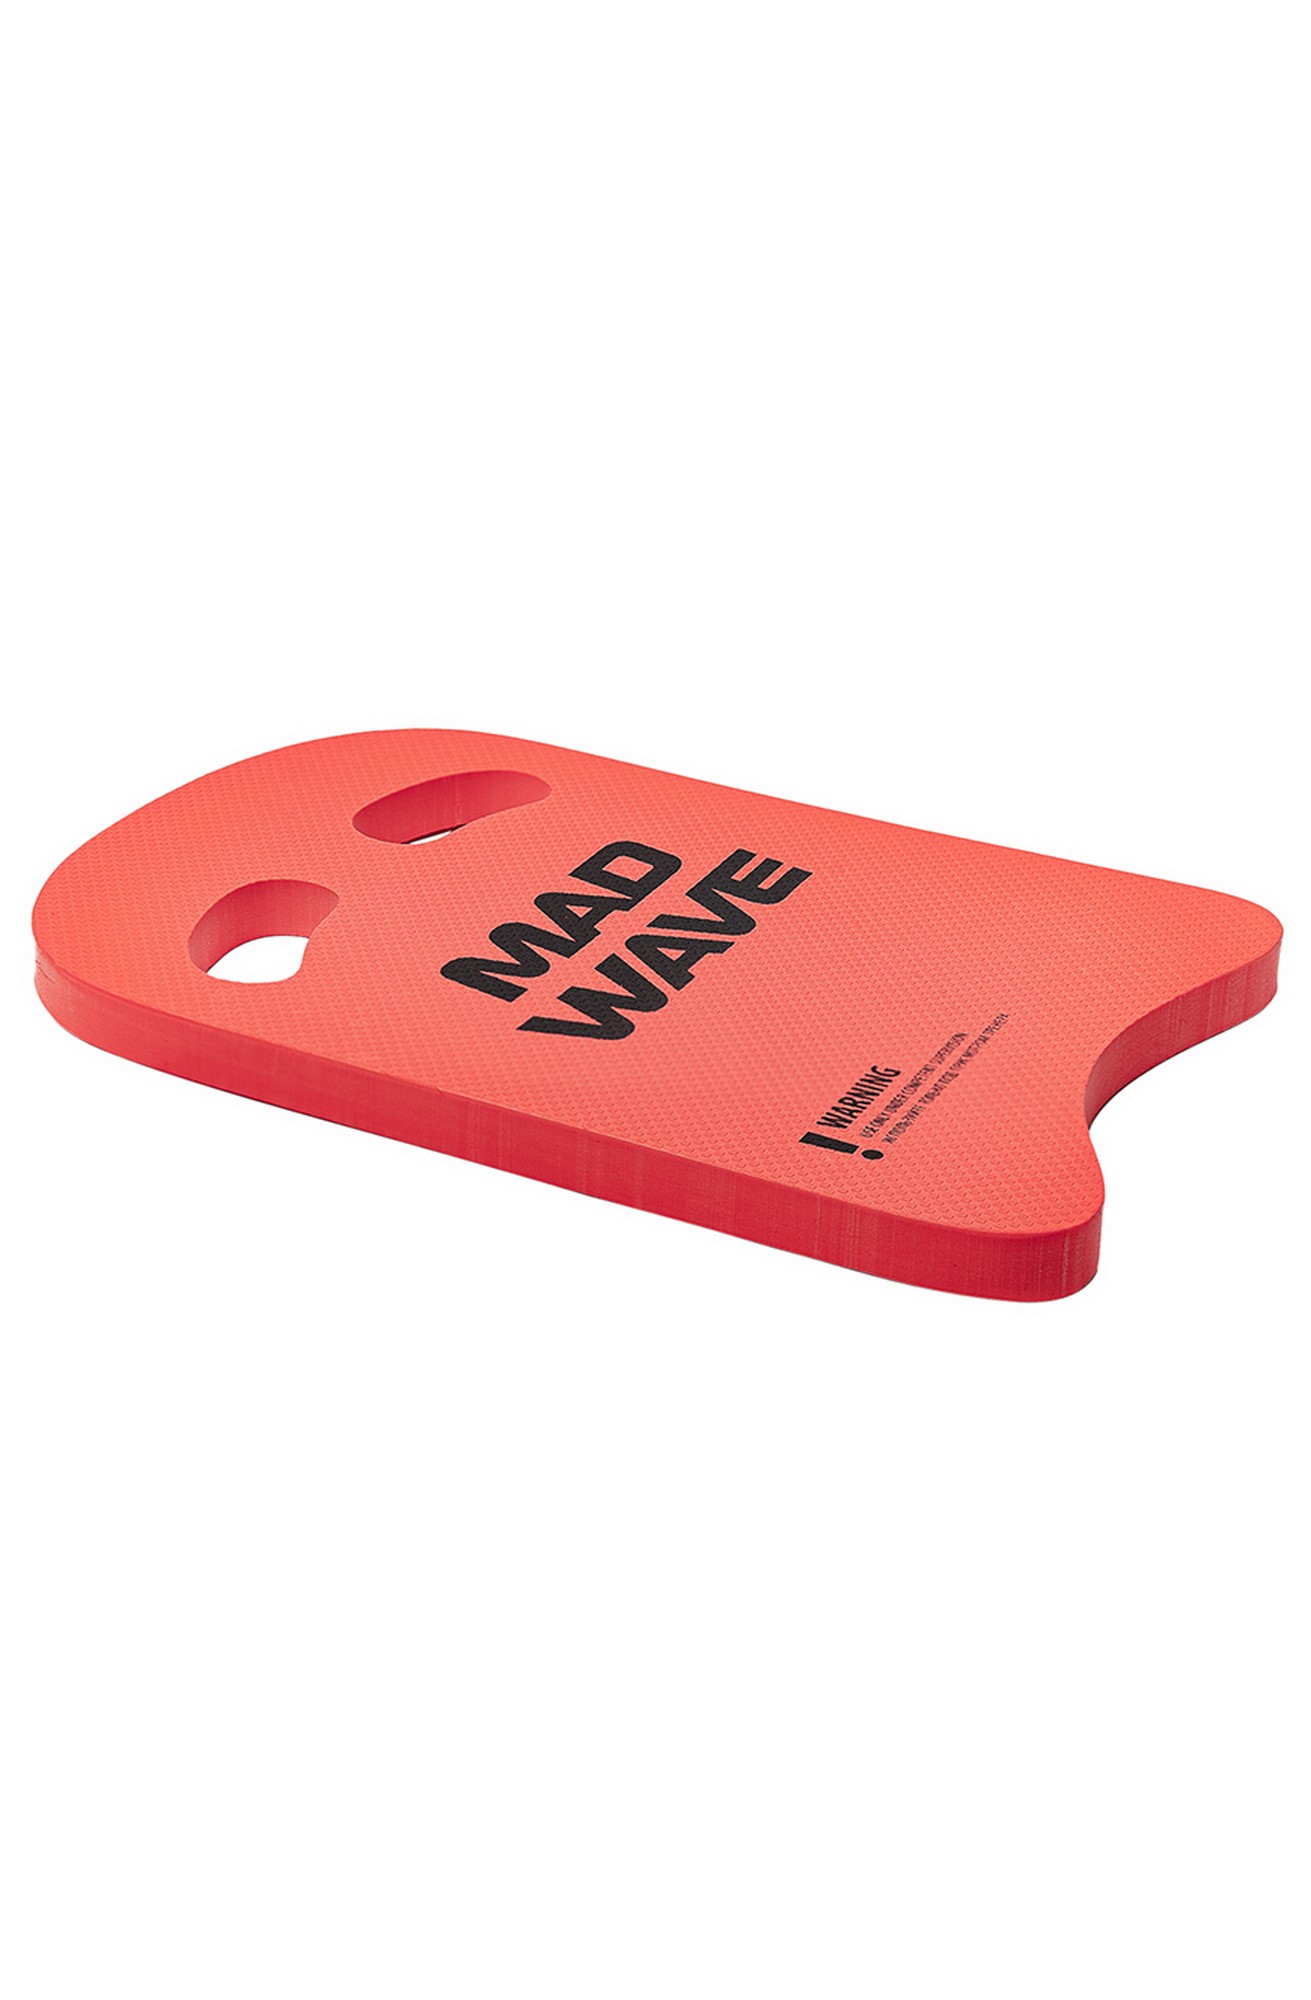 Доска для плавания Mad Wave Kickboard Light 25 M0721 02 0 05W 1311_2000